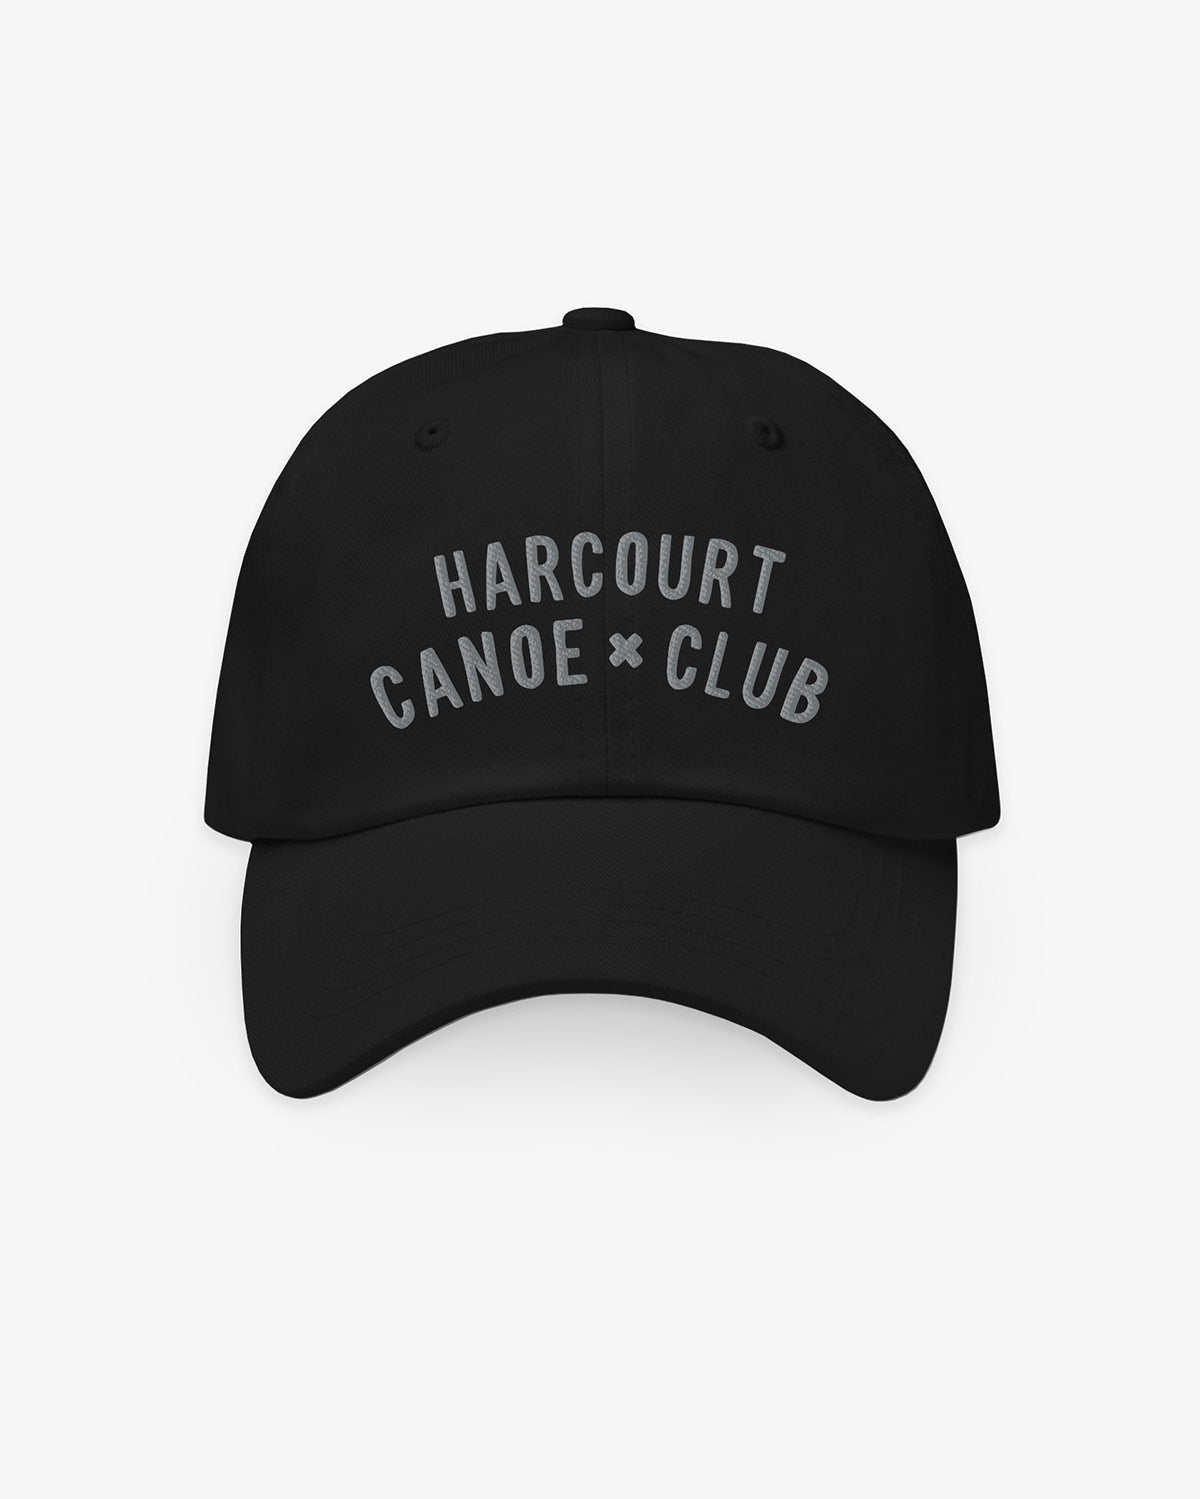 Canoe Club - Harcourt - Hat